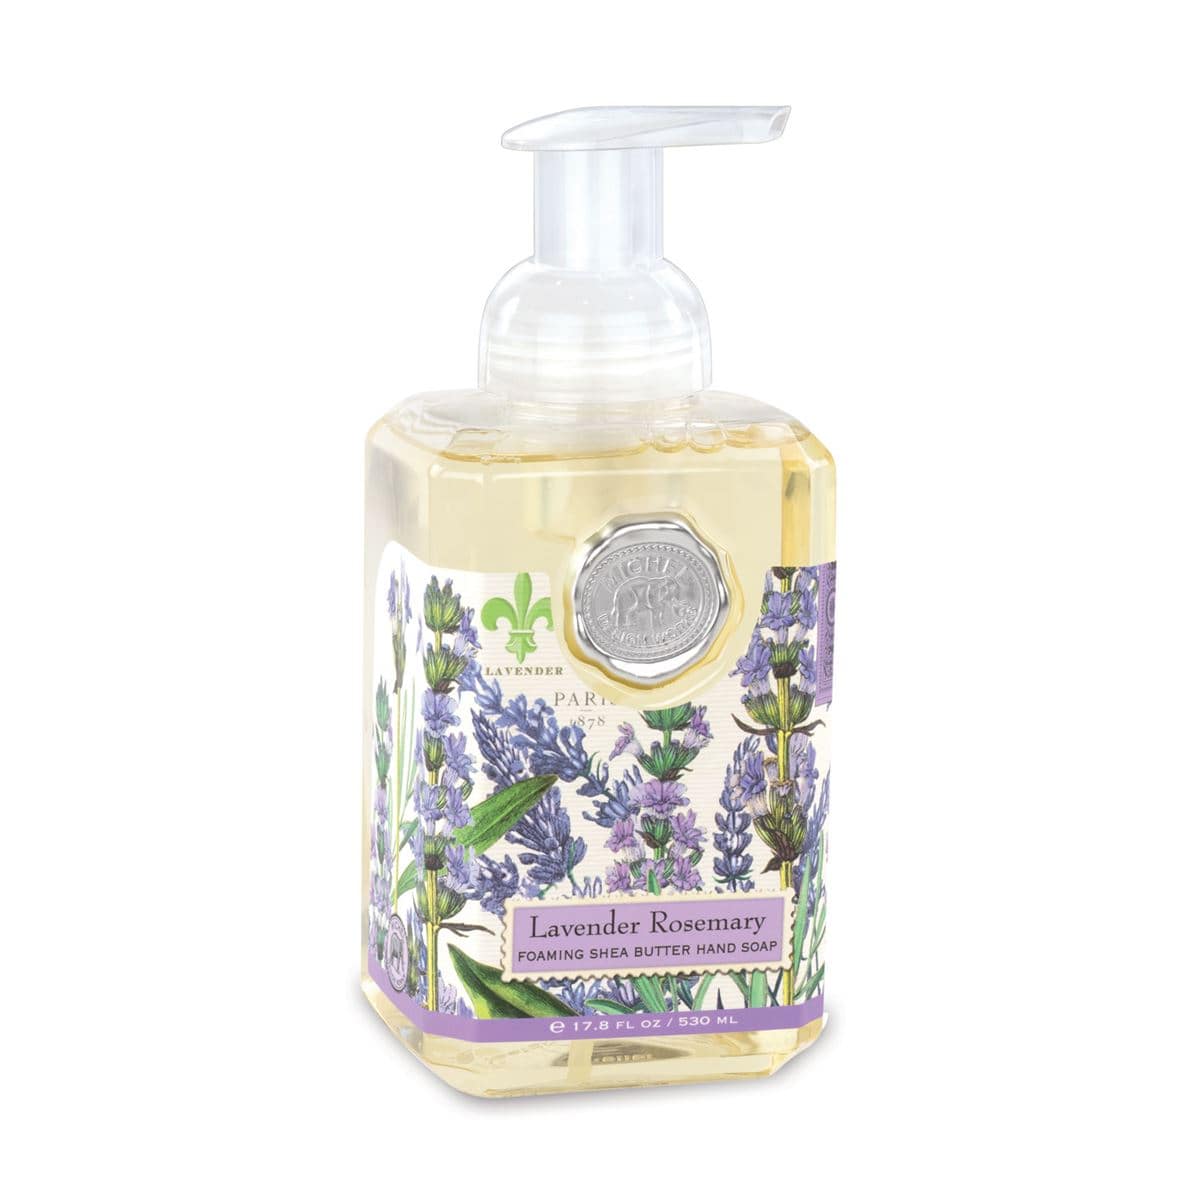 Lavender Rosemary Foaming Soap - Findlay Rowe Designs